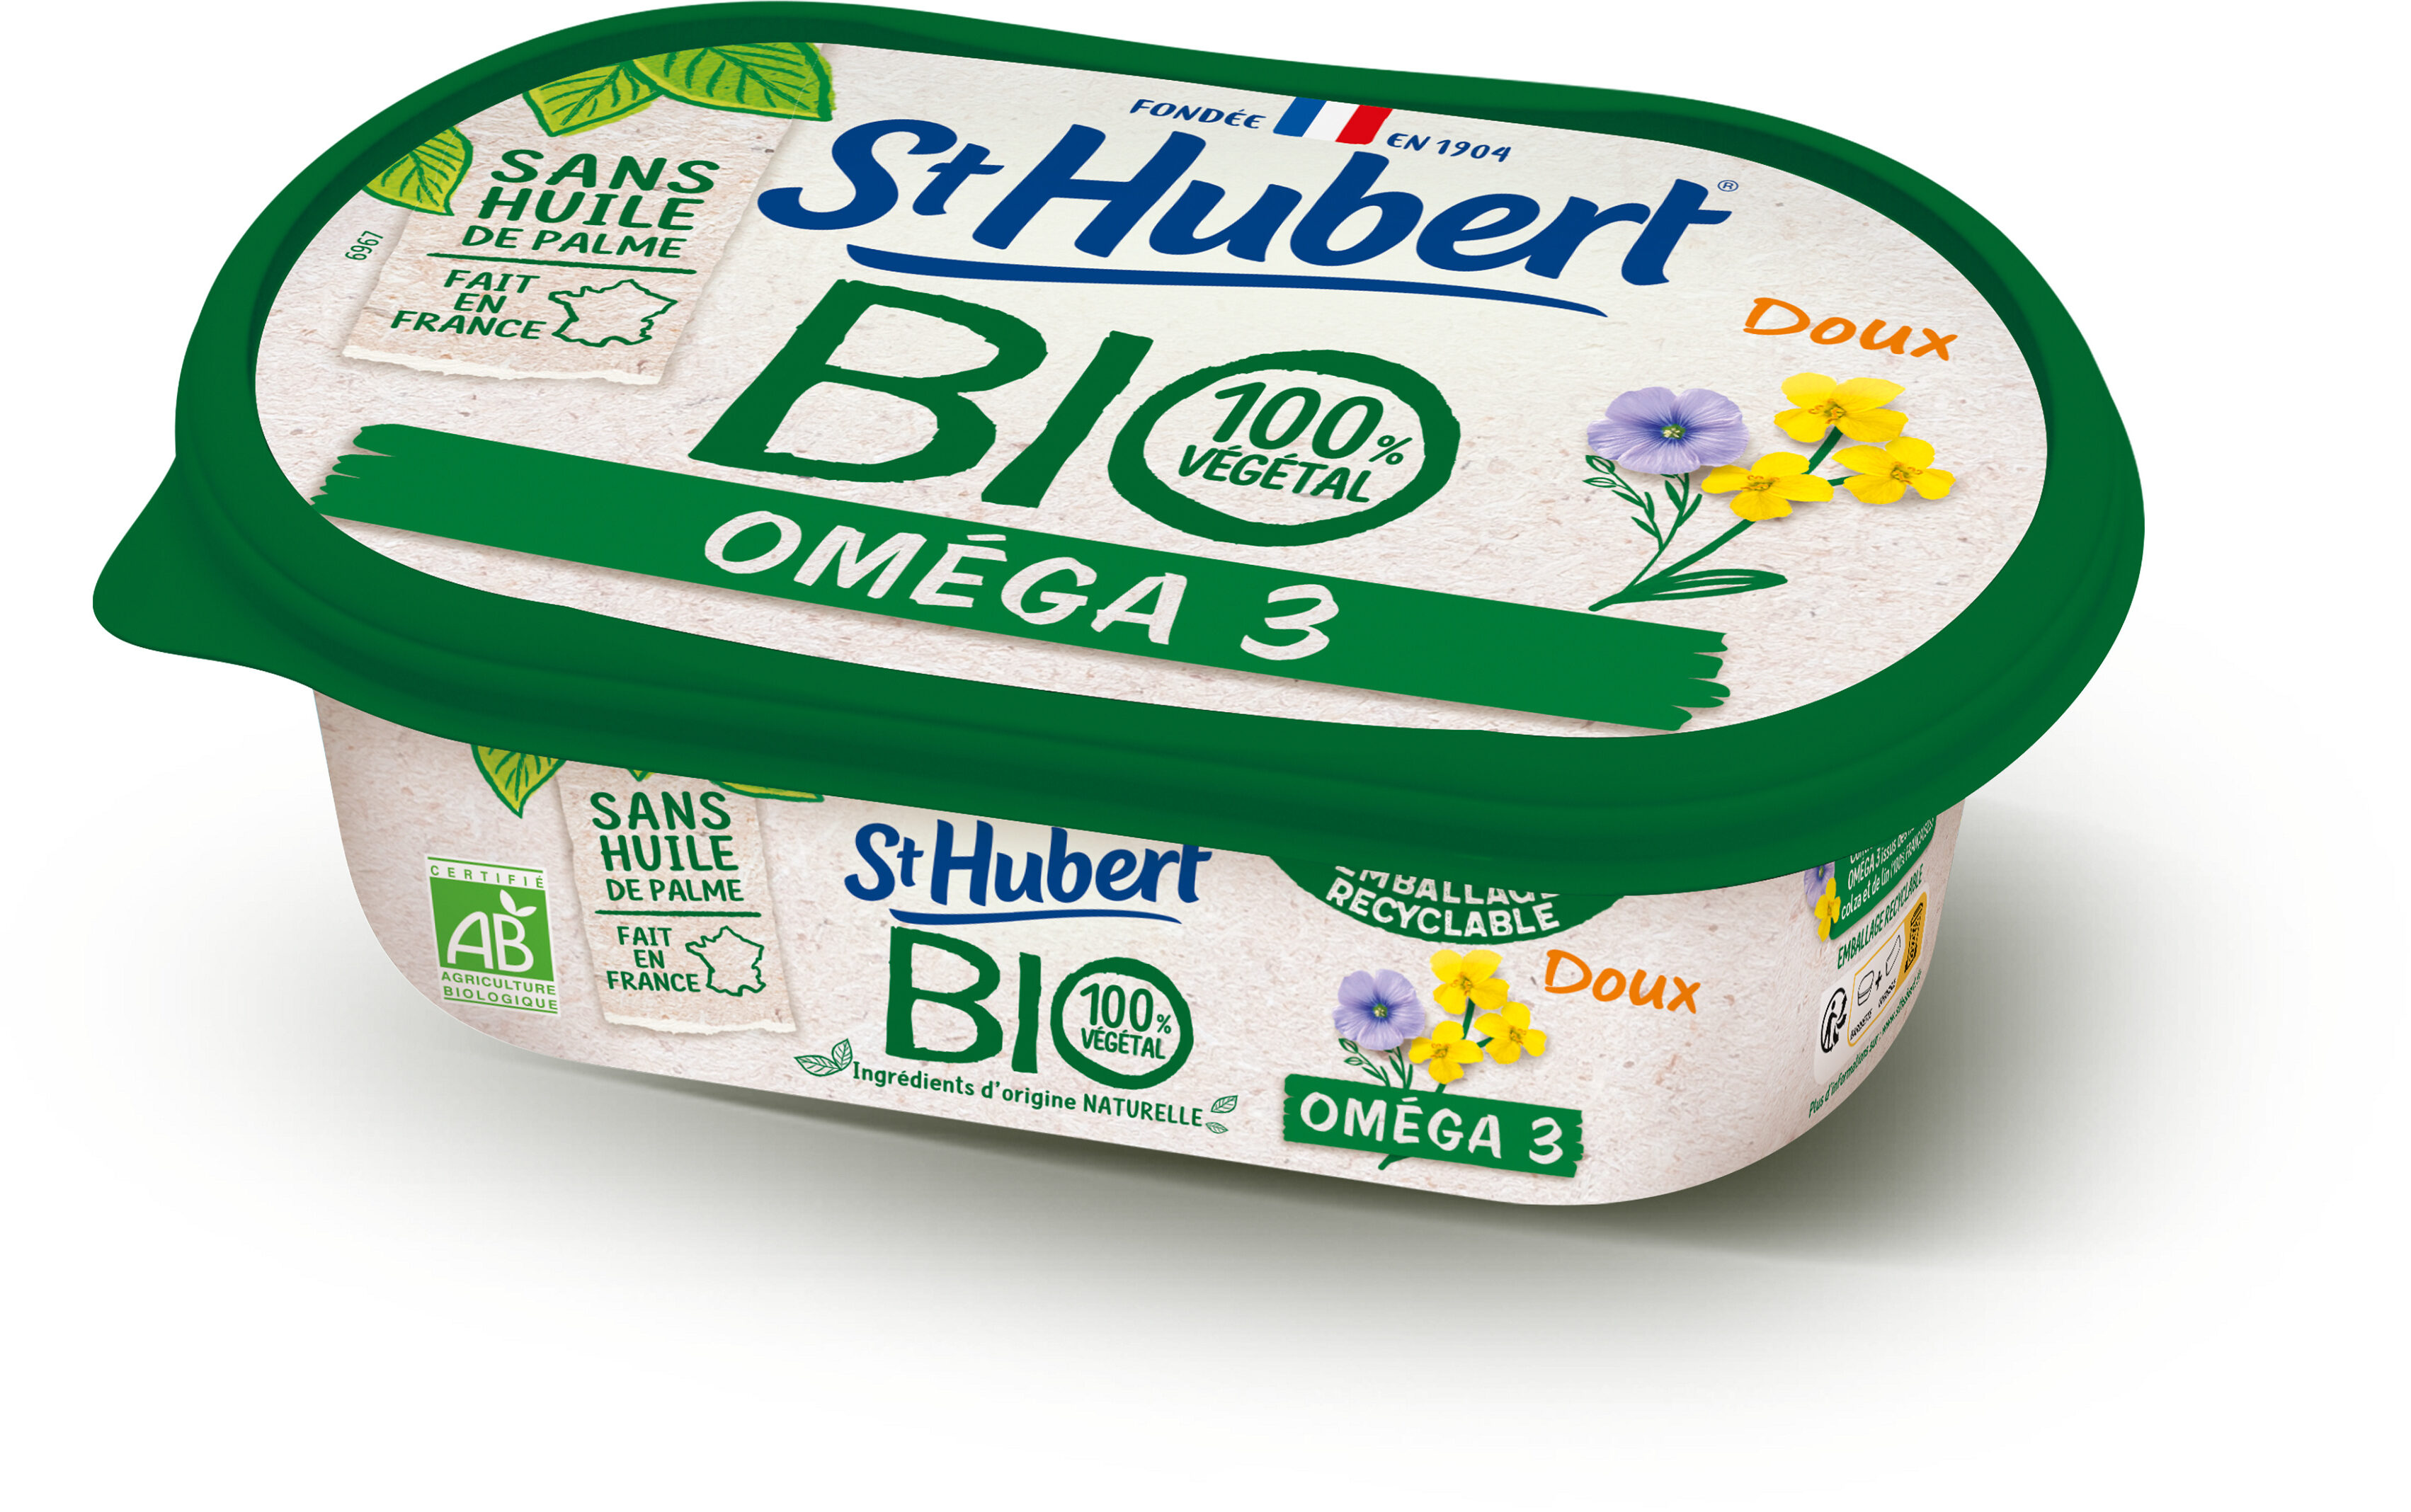 St hubert bio omega 3 230 g doux sans hdp - Product - fr